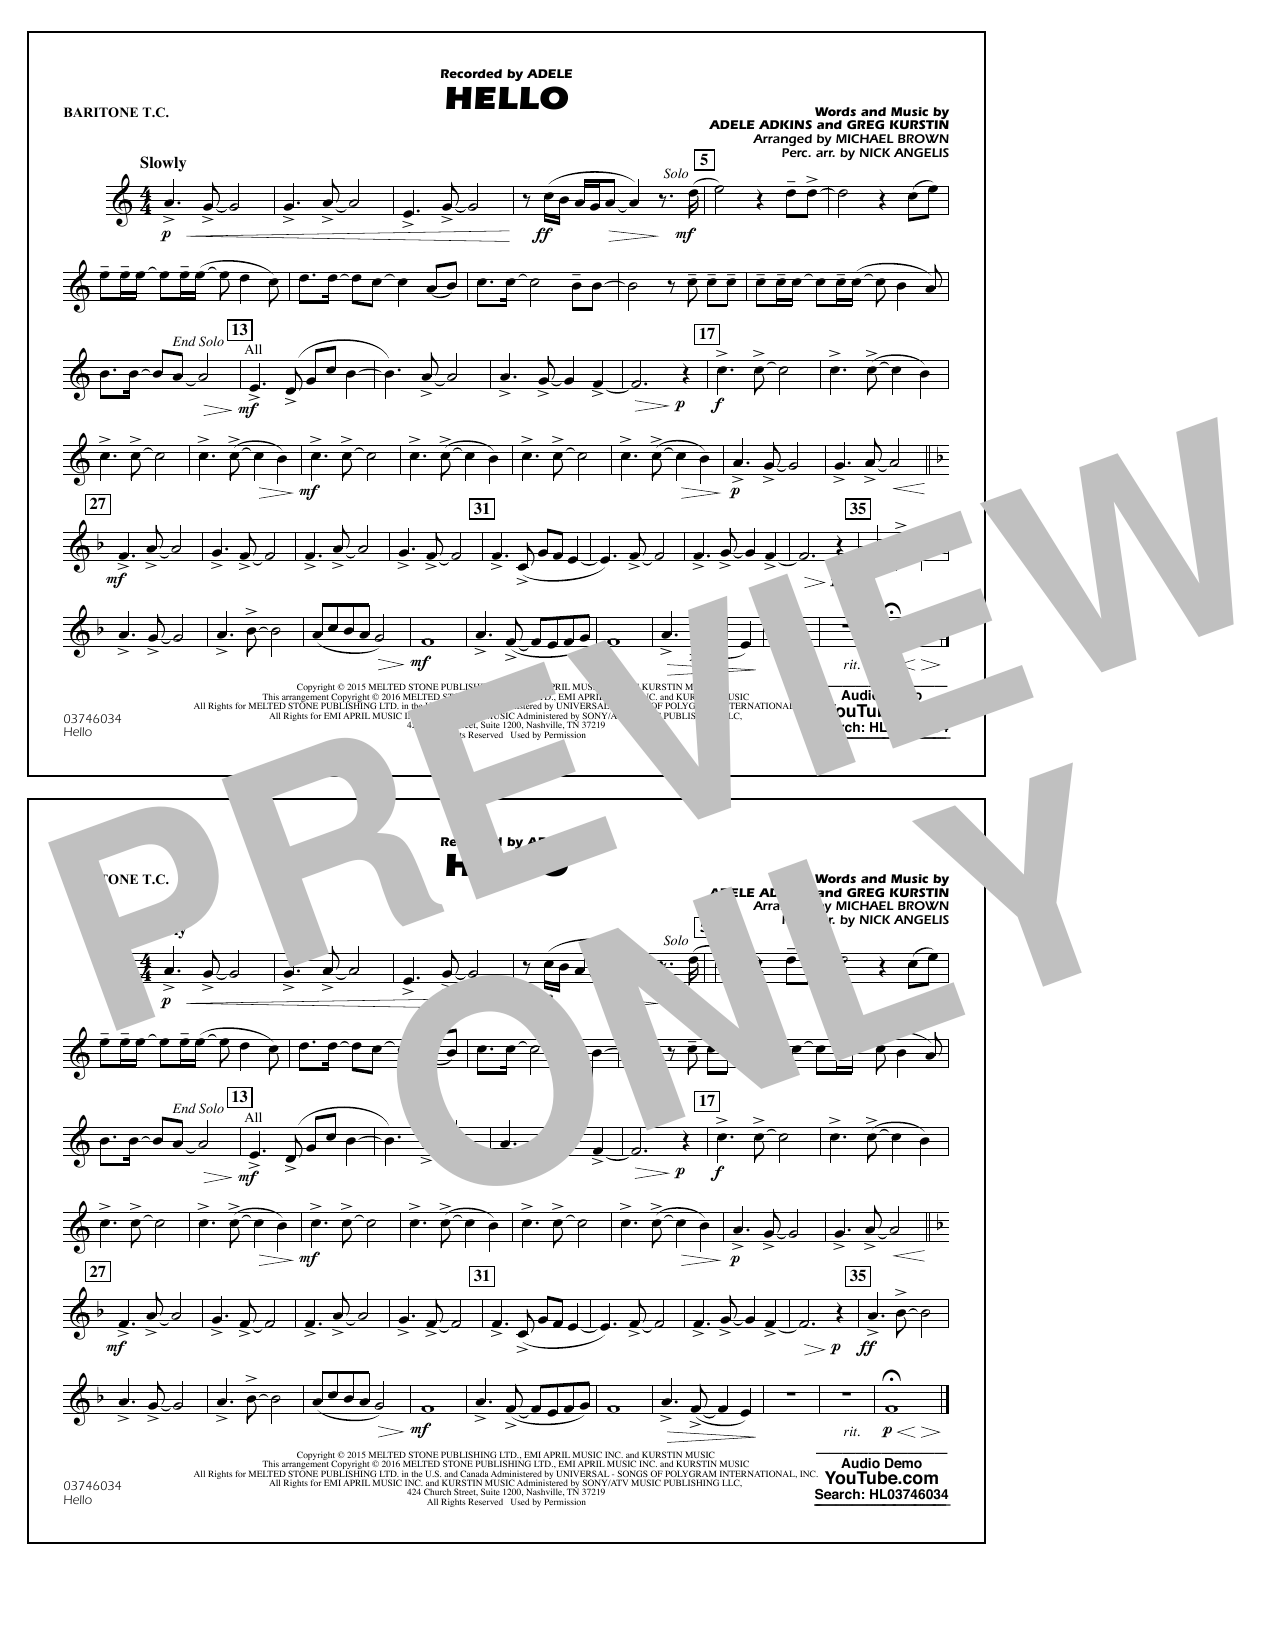 Download Michael Brown Hello - Baritone T.C. Sheet Music